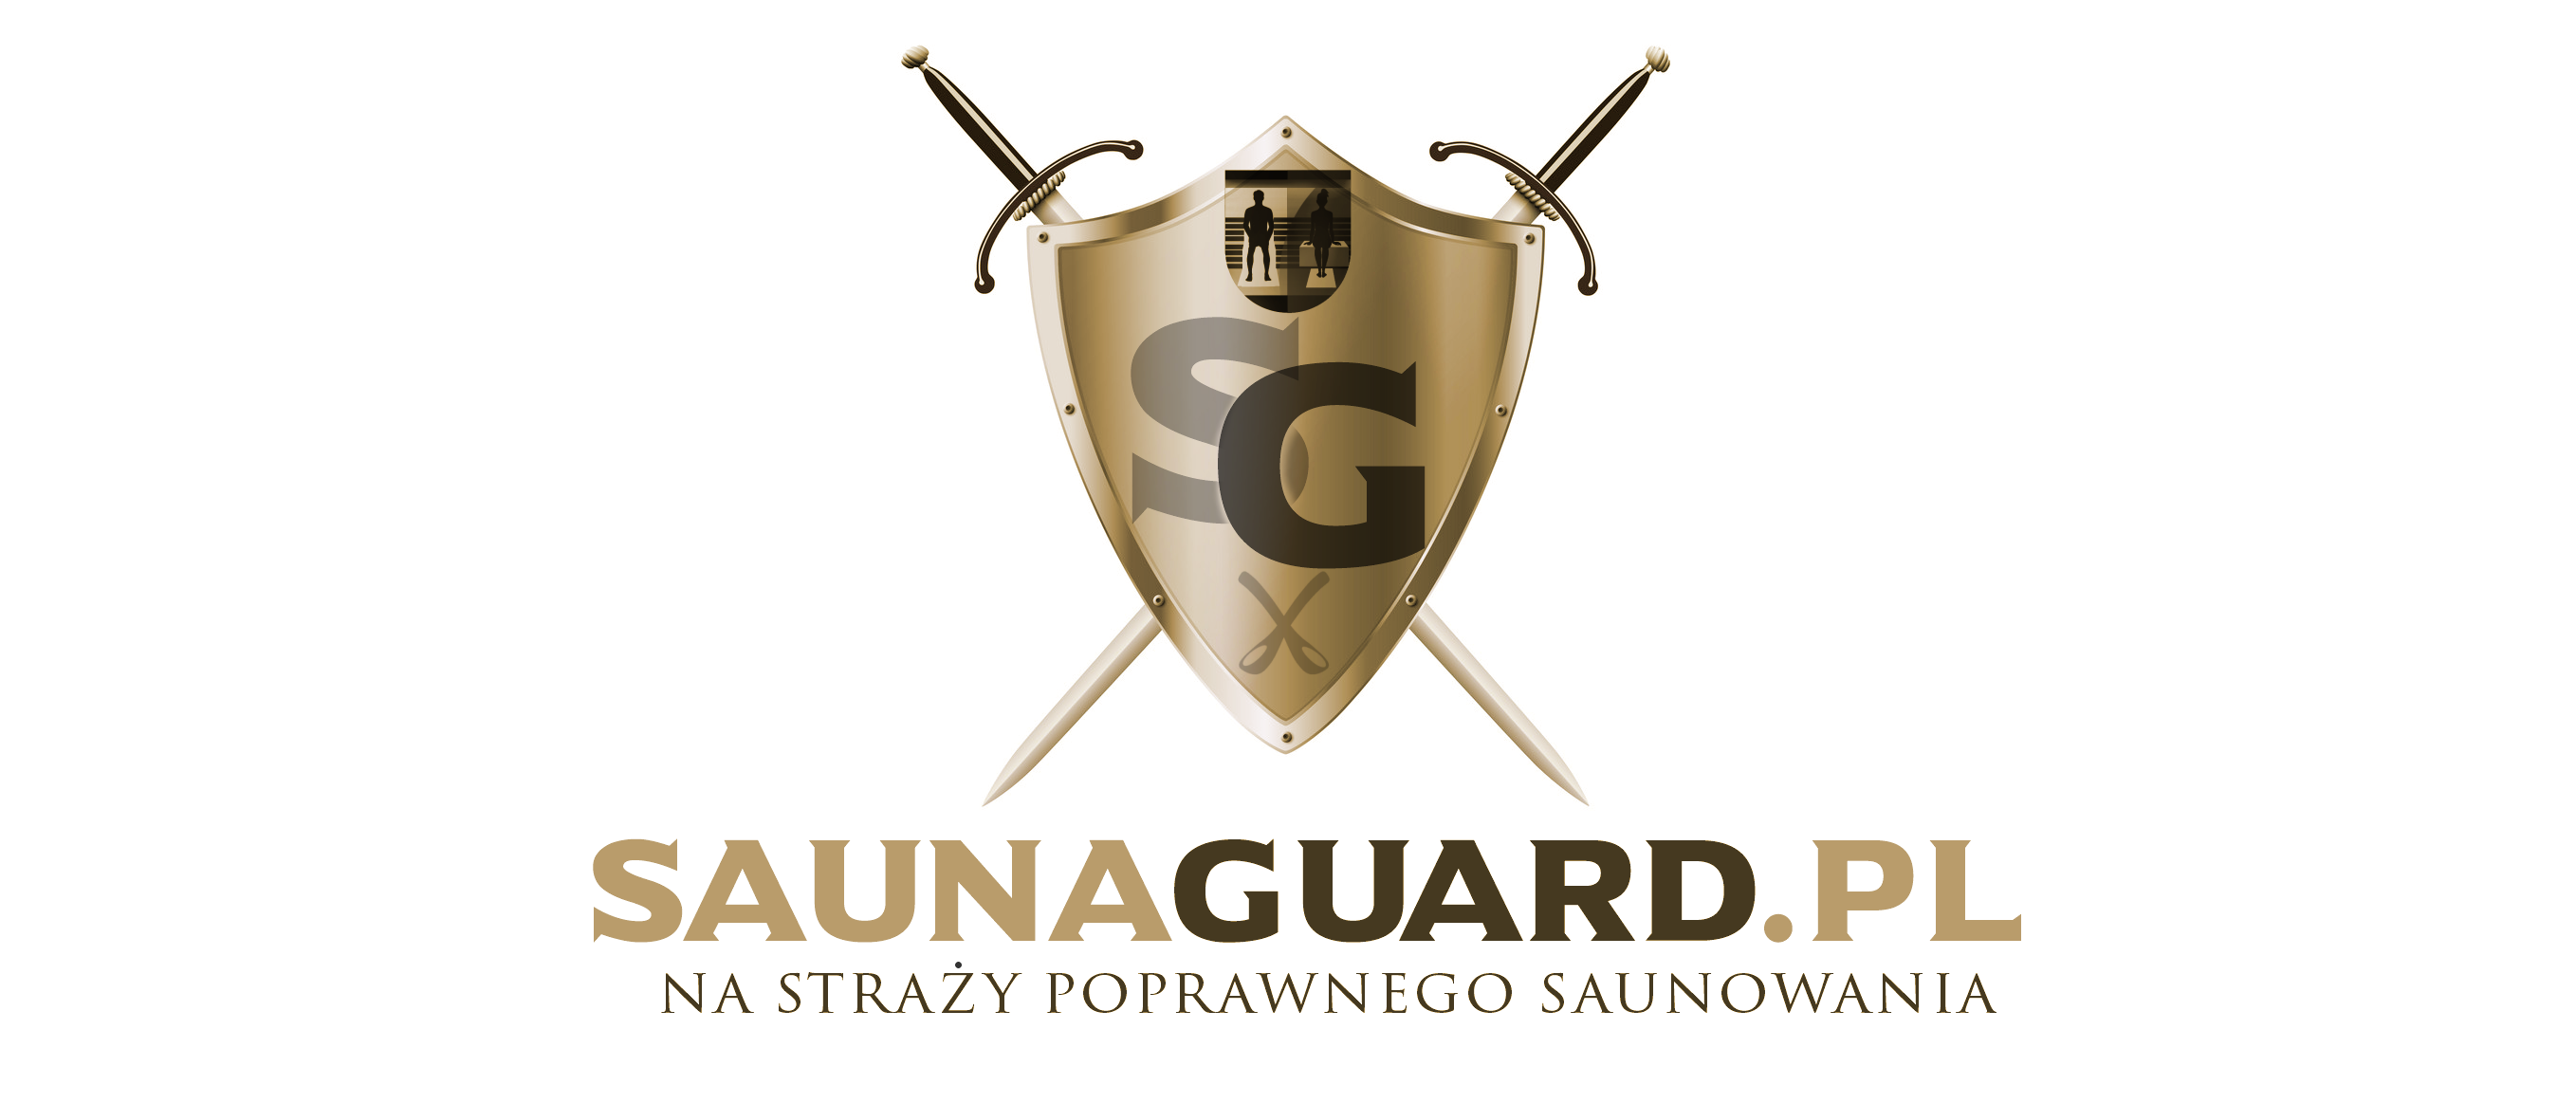 SaunaGuard.pl